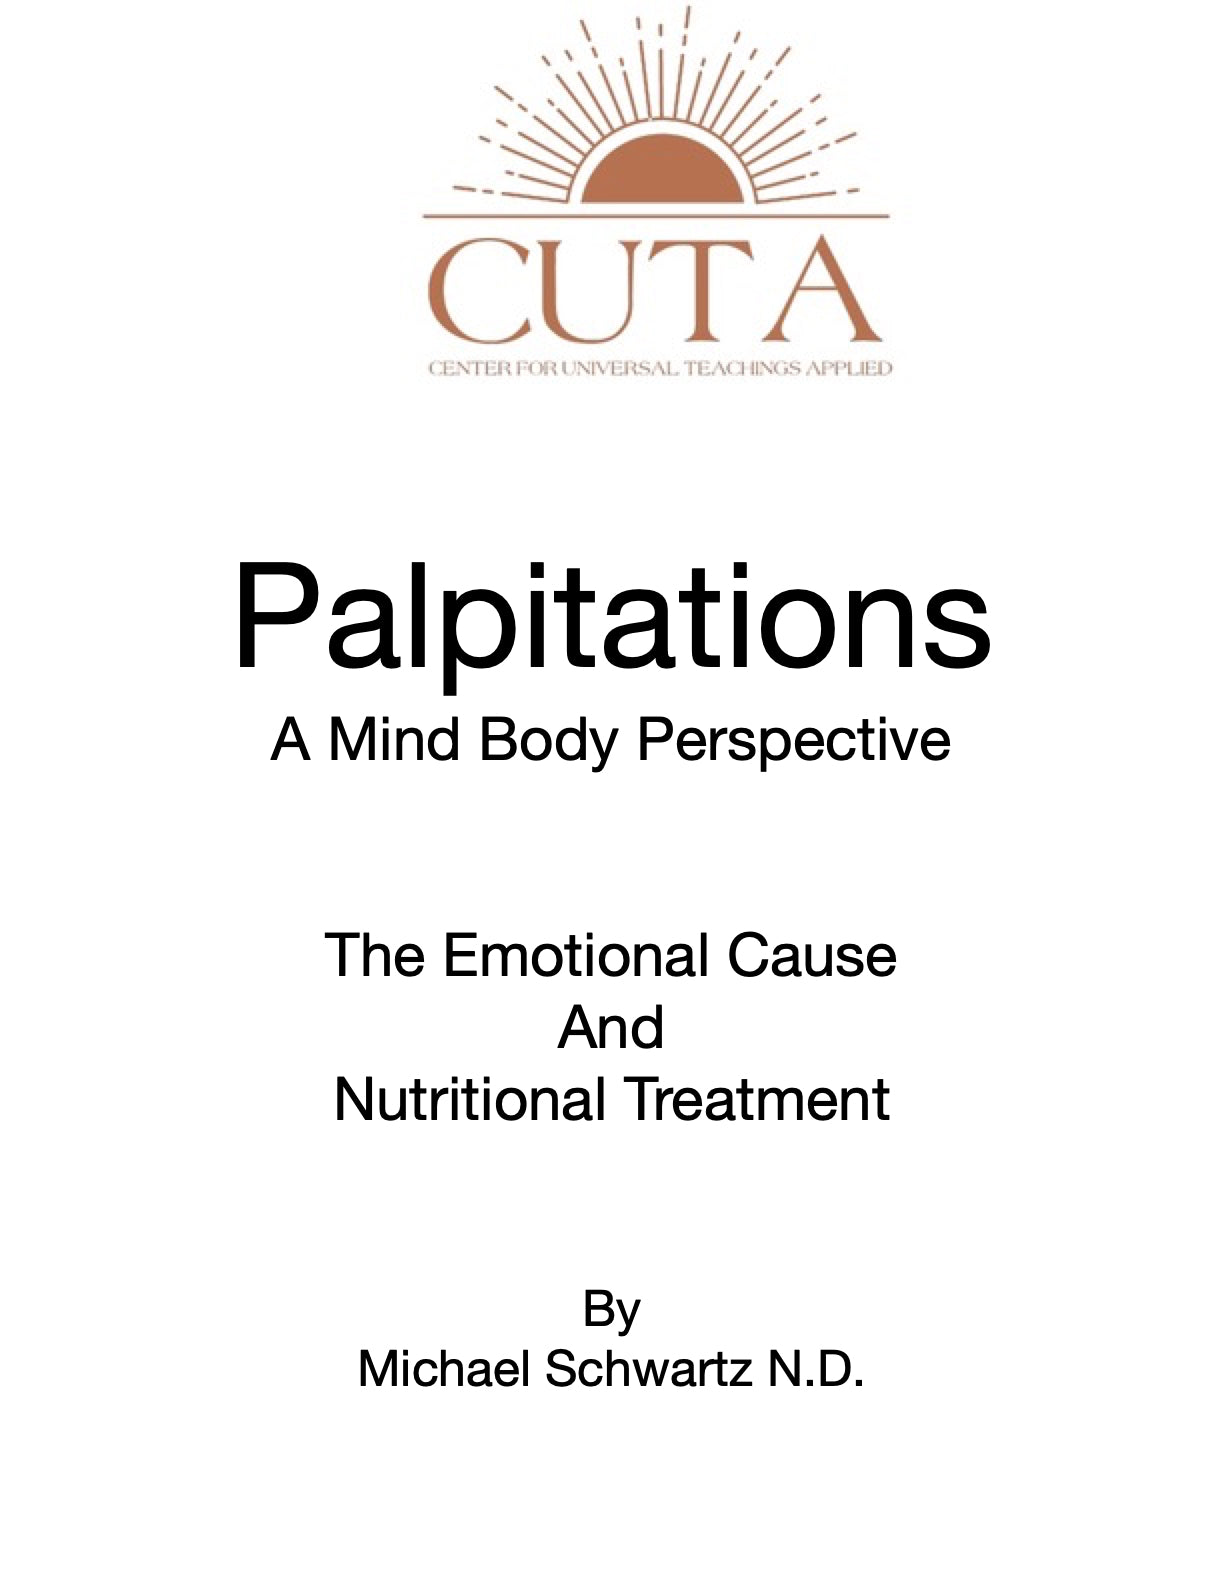 Palpitations Booklet